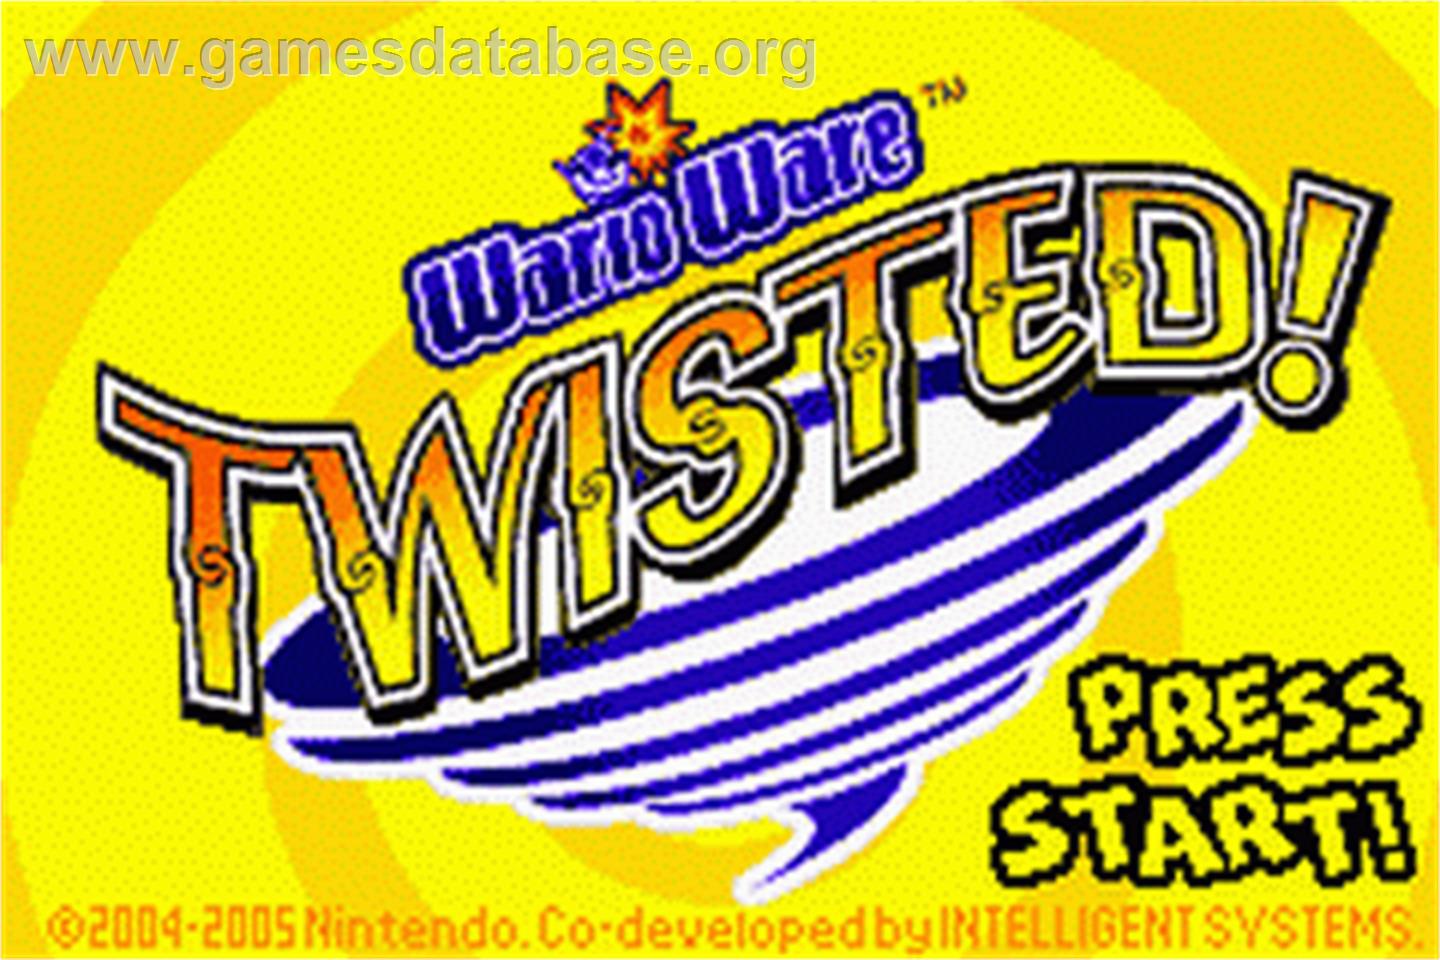 WarioWare Twisted - Nintendo Game Boy Advance - Artwork - Title Screen